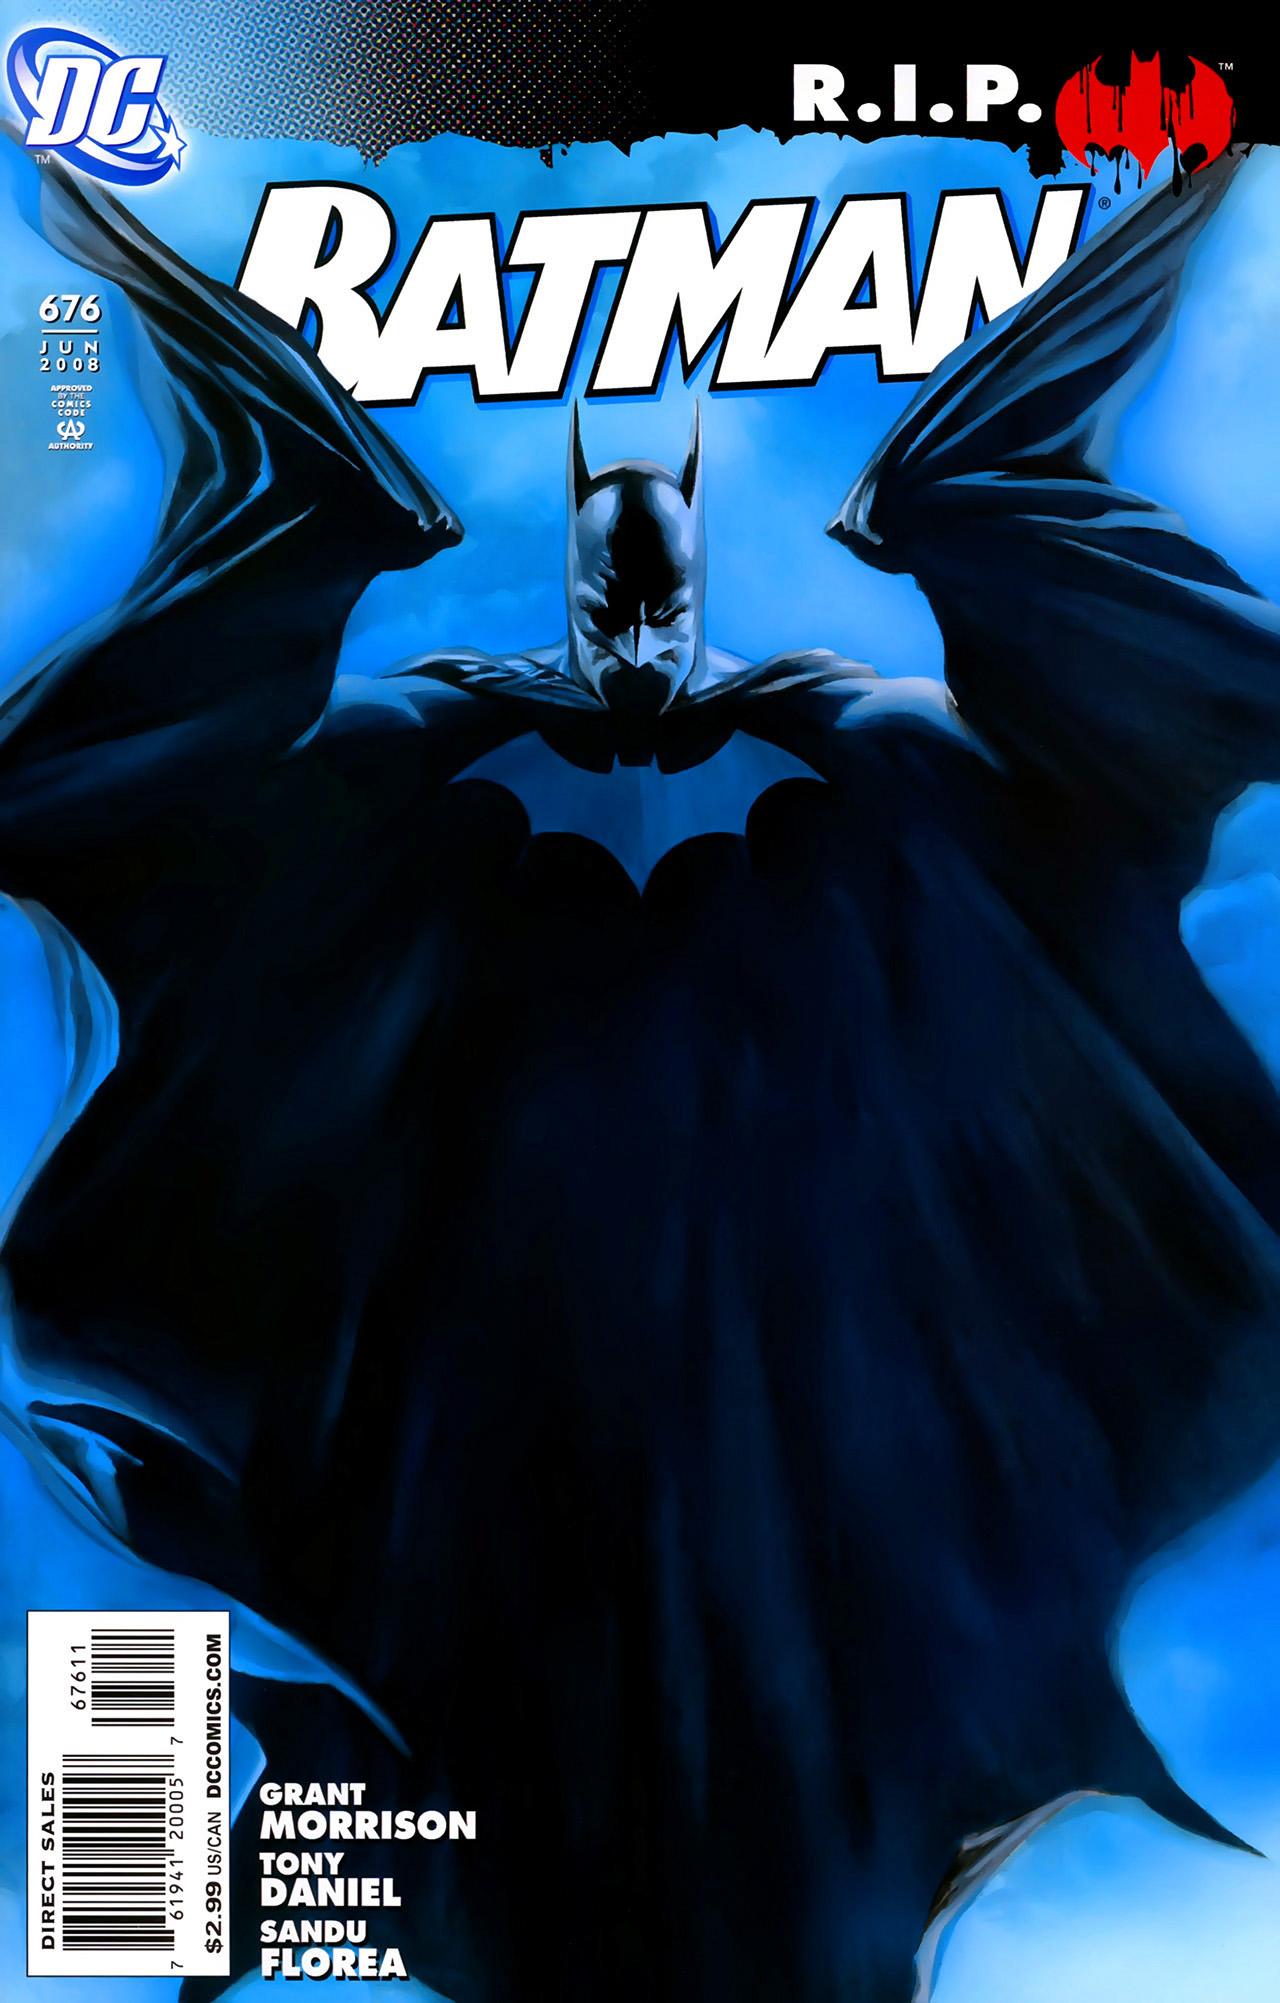 [RANKING QUADRINHOS] - Guerra Civil 2 (encerrado) - Página 15 Batman-676